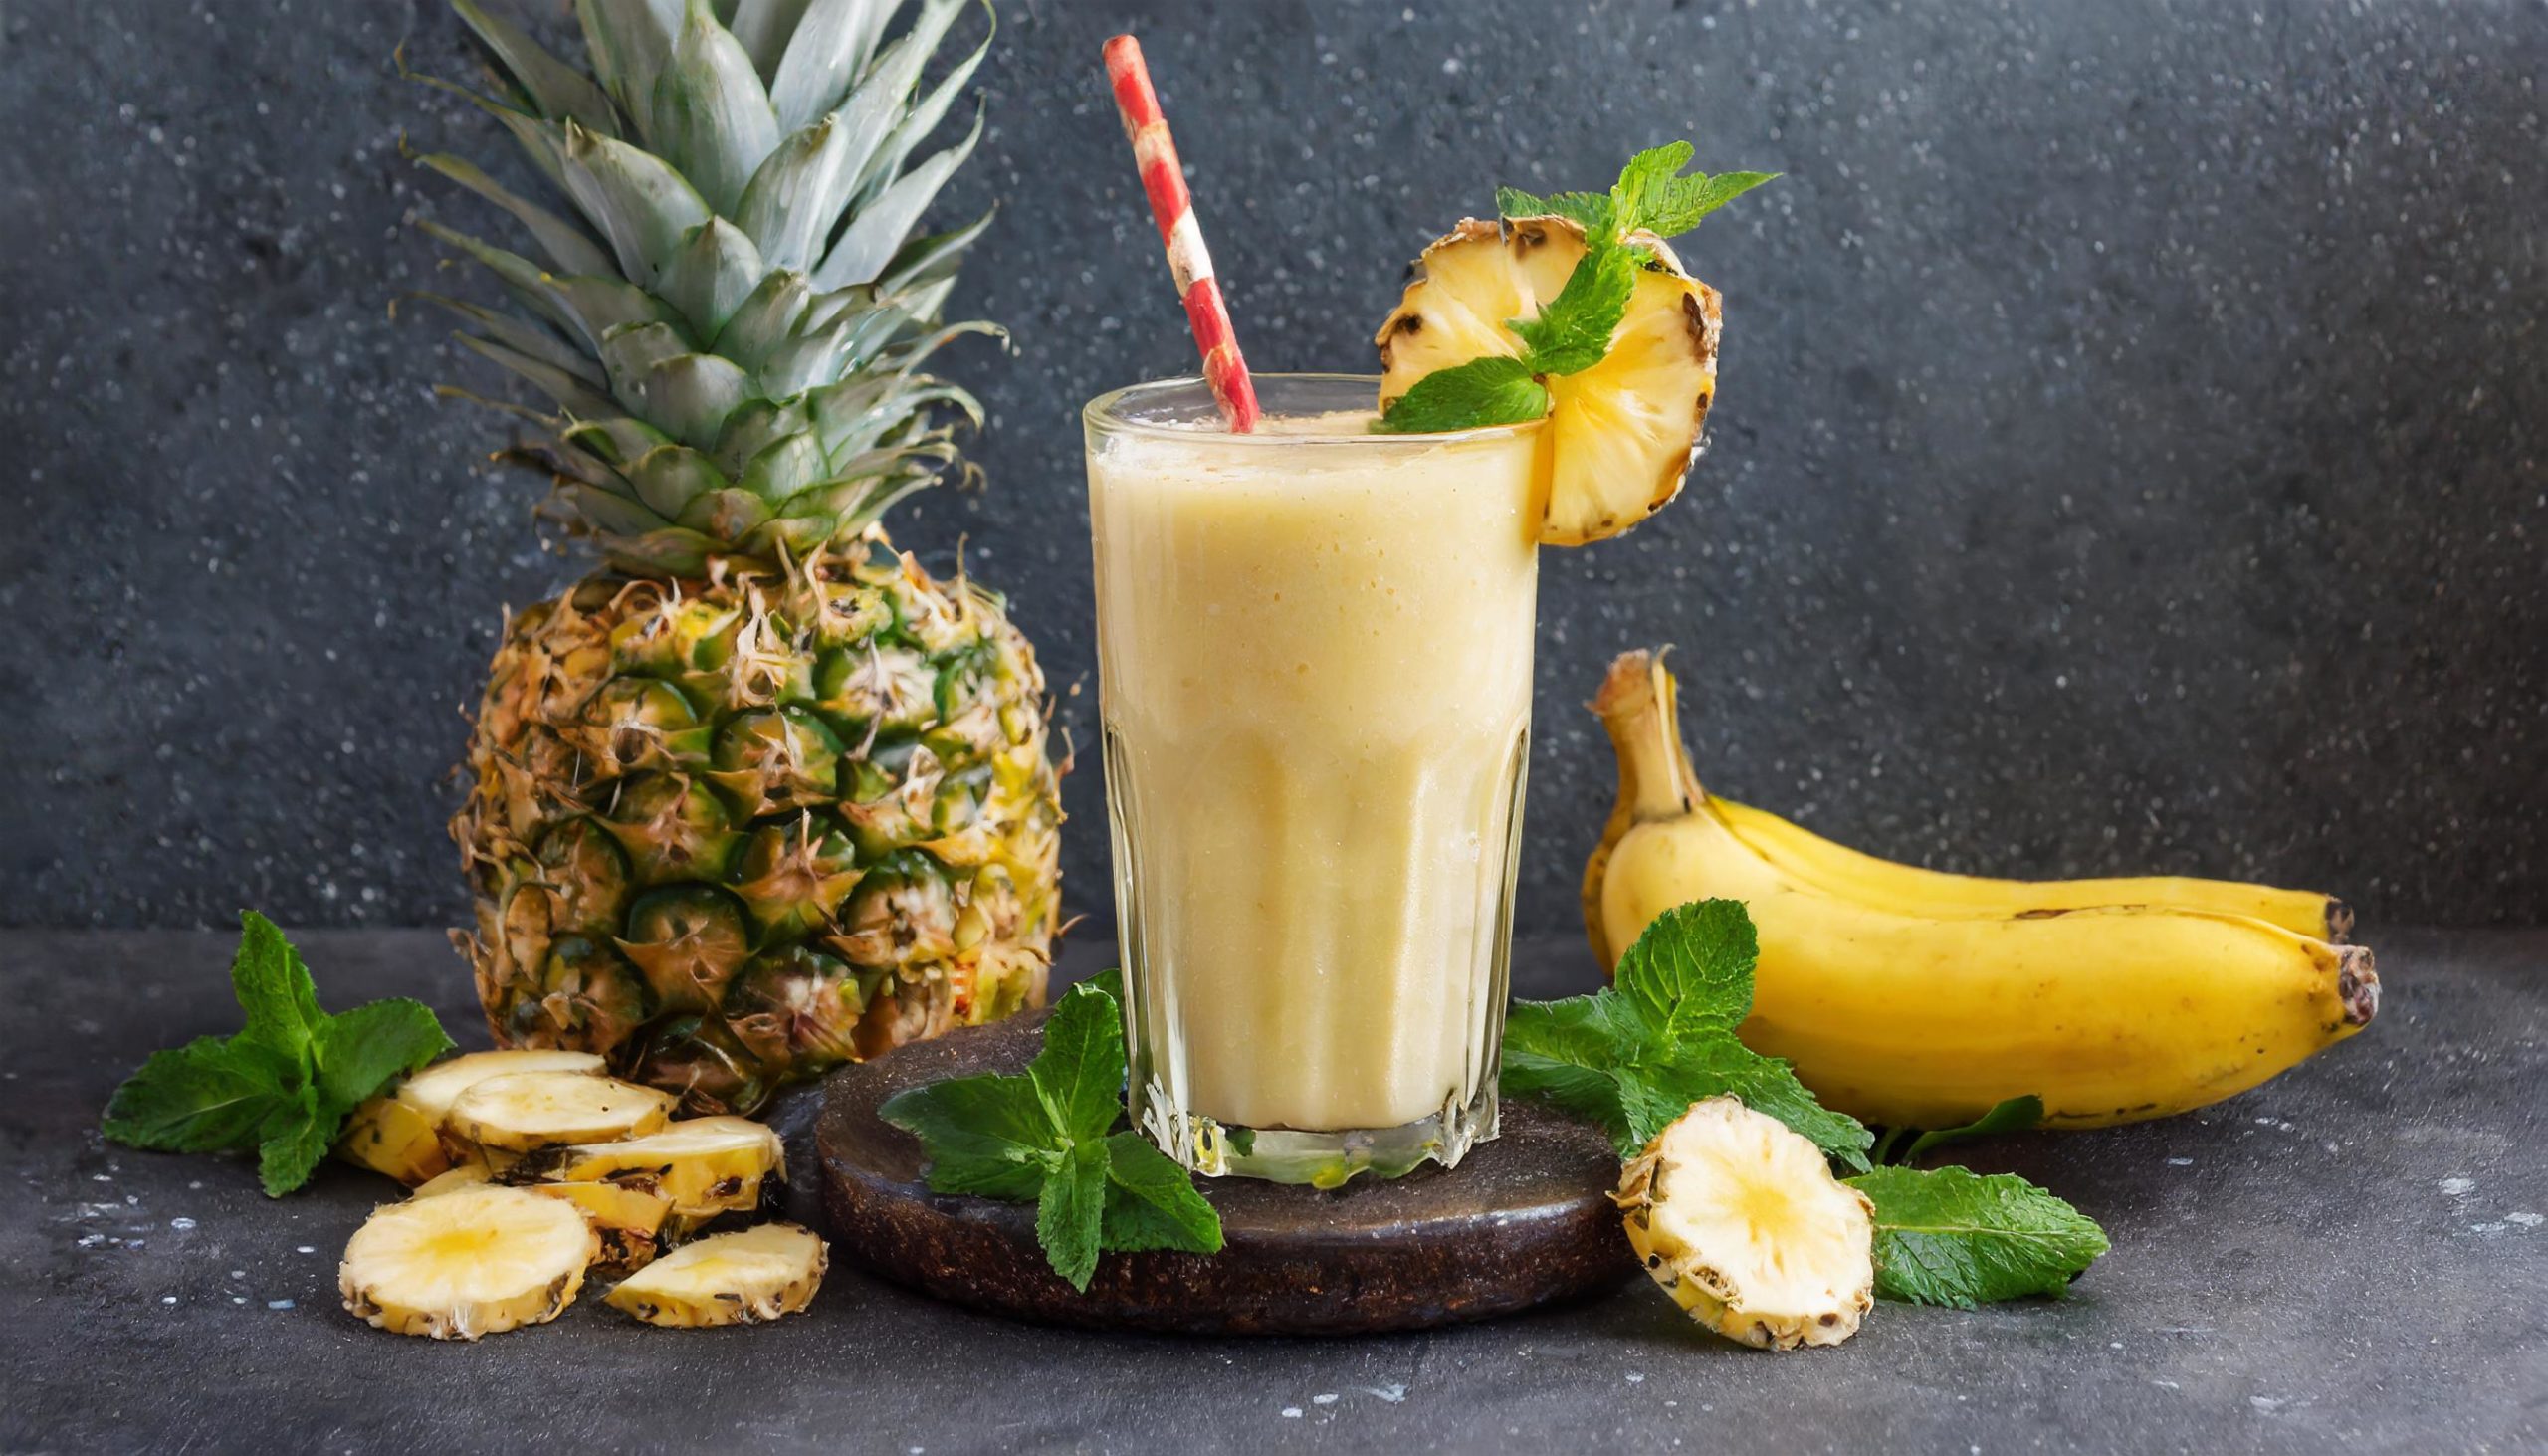 Pineapple and banana smoothie